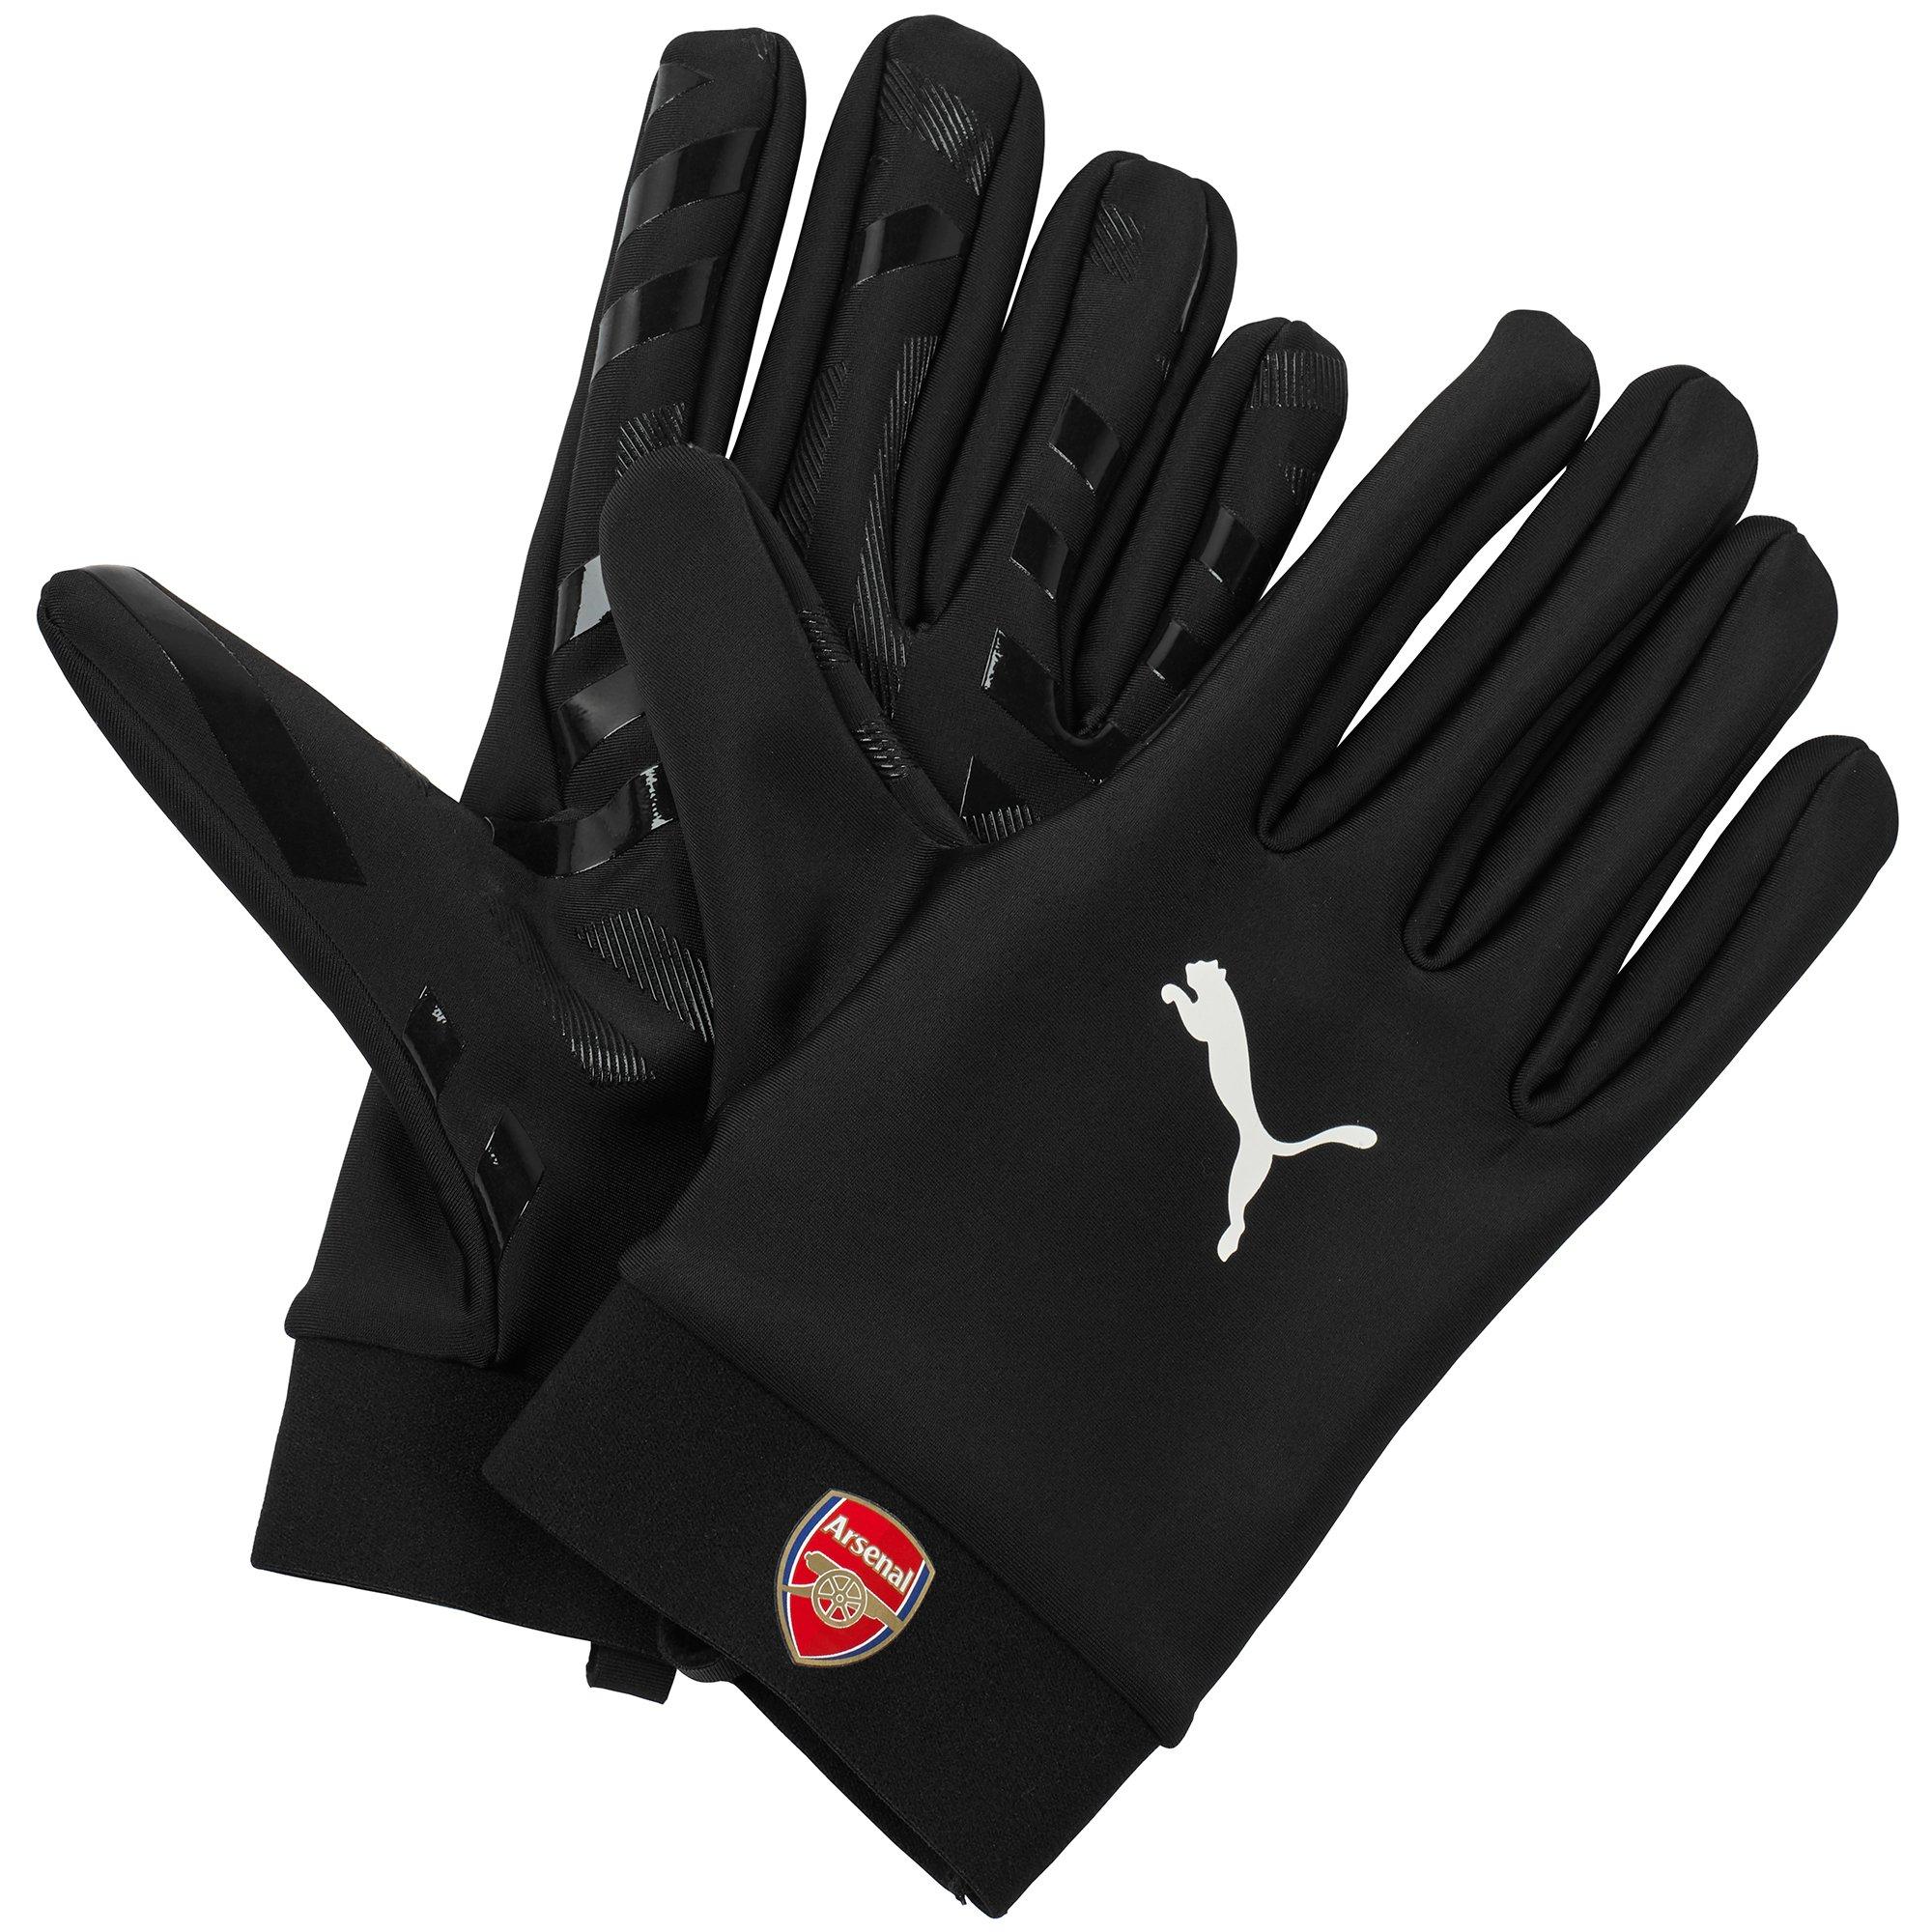 Arsenal 18/19 Field Player Gloves 